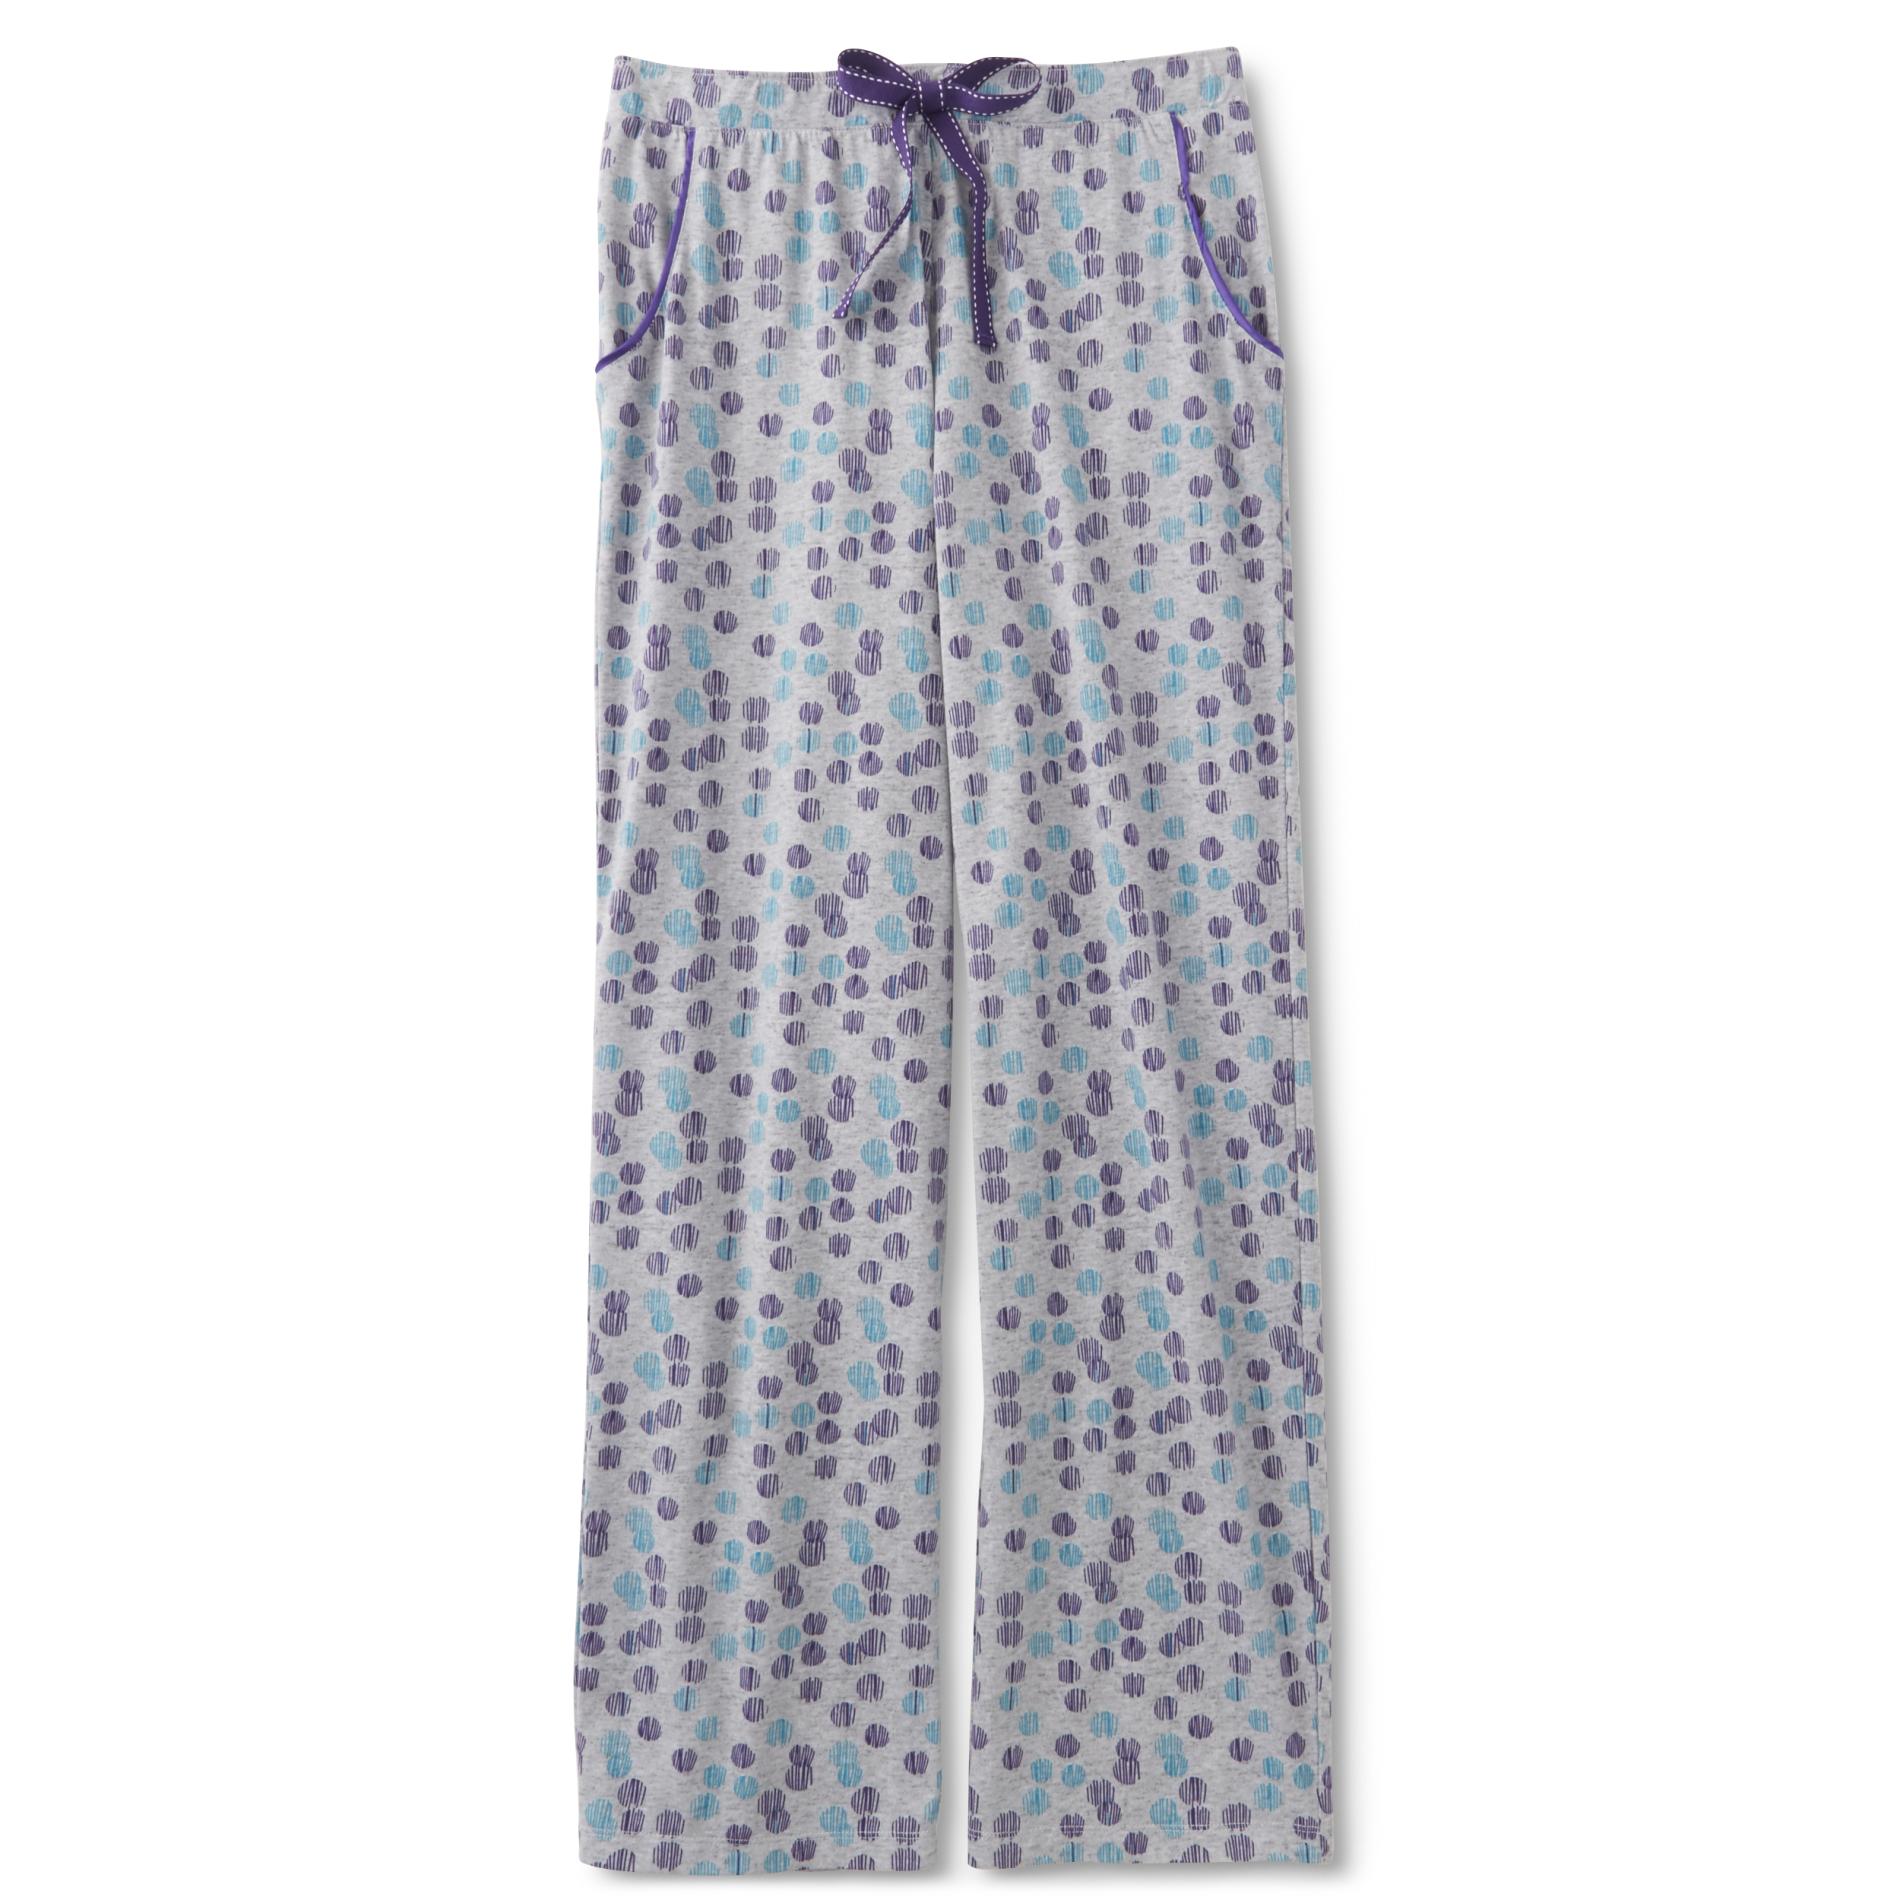 Covington Women's Pajama Pants - Dots